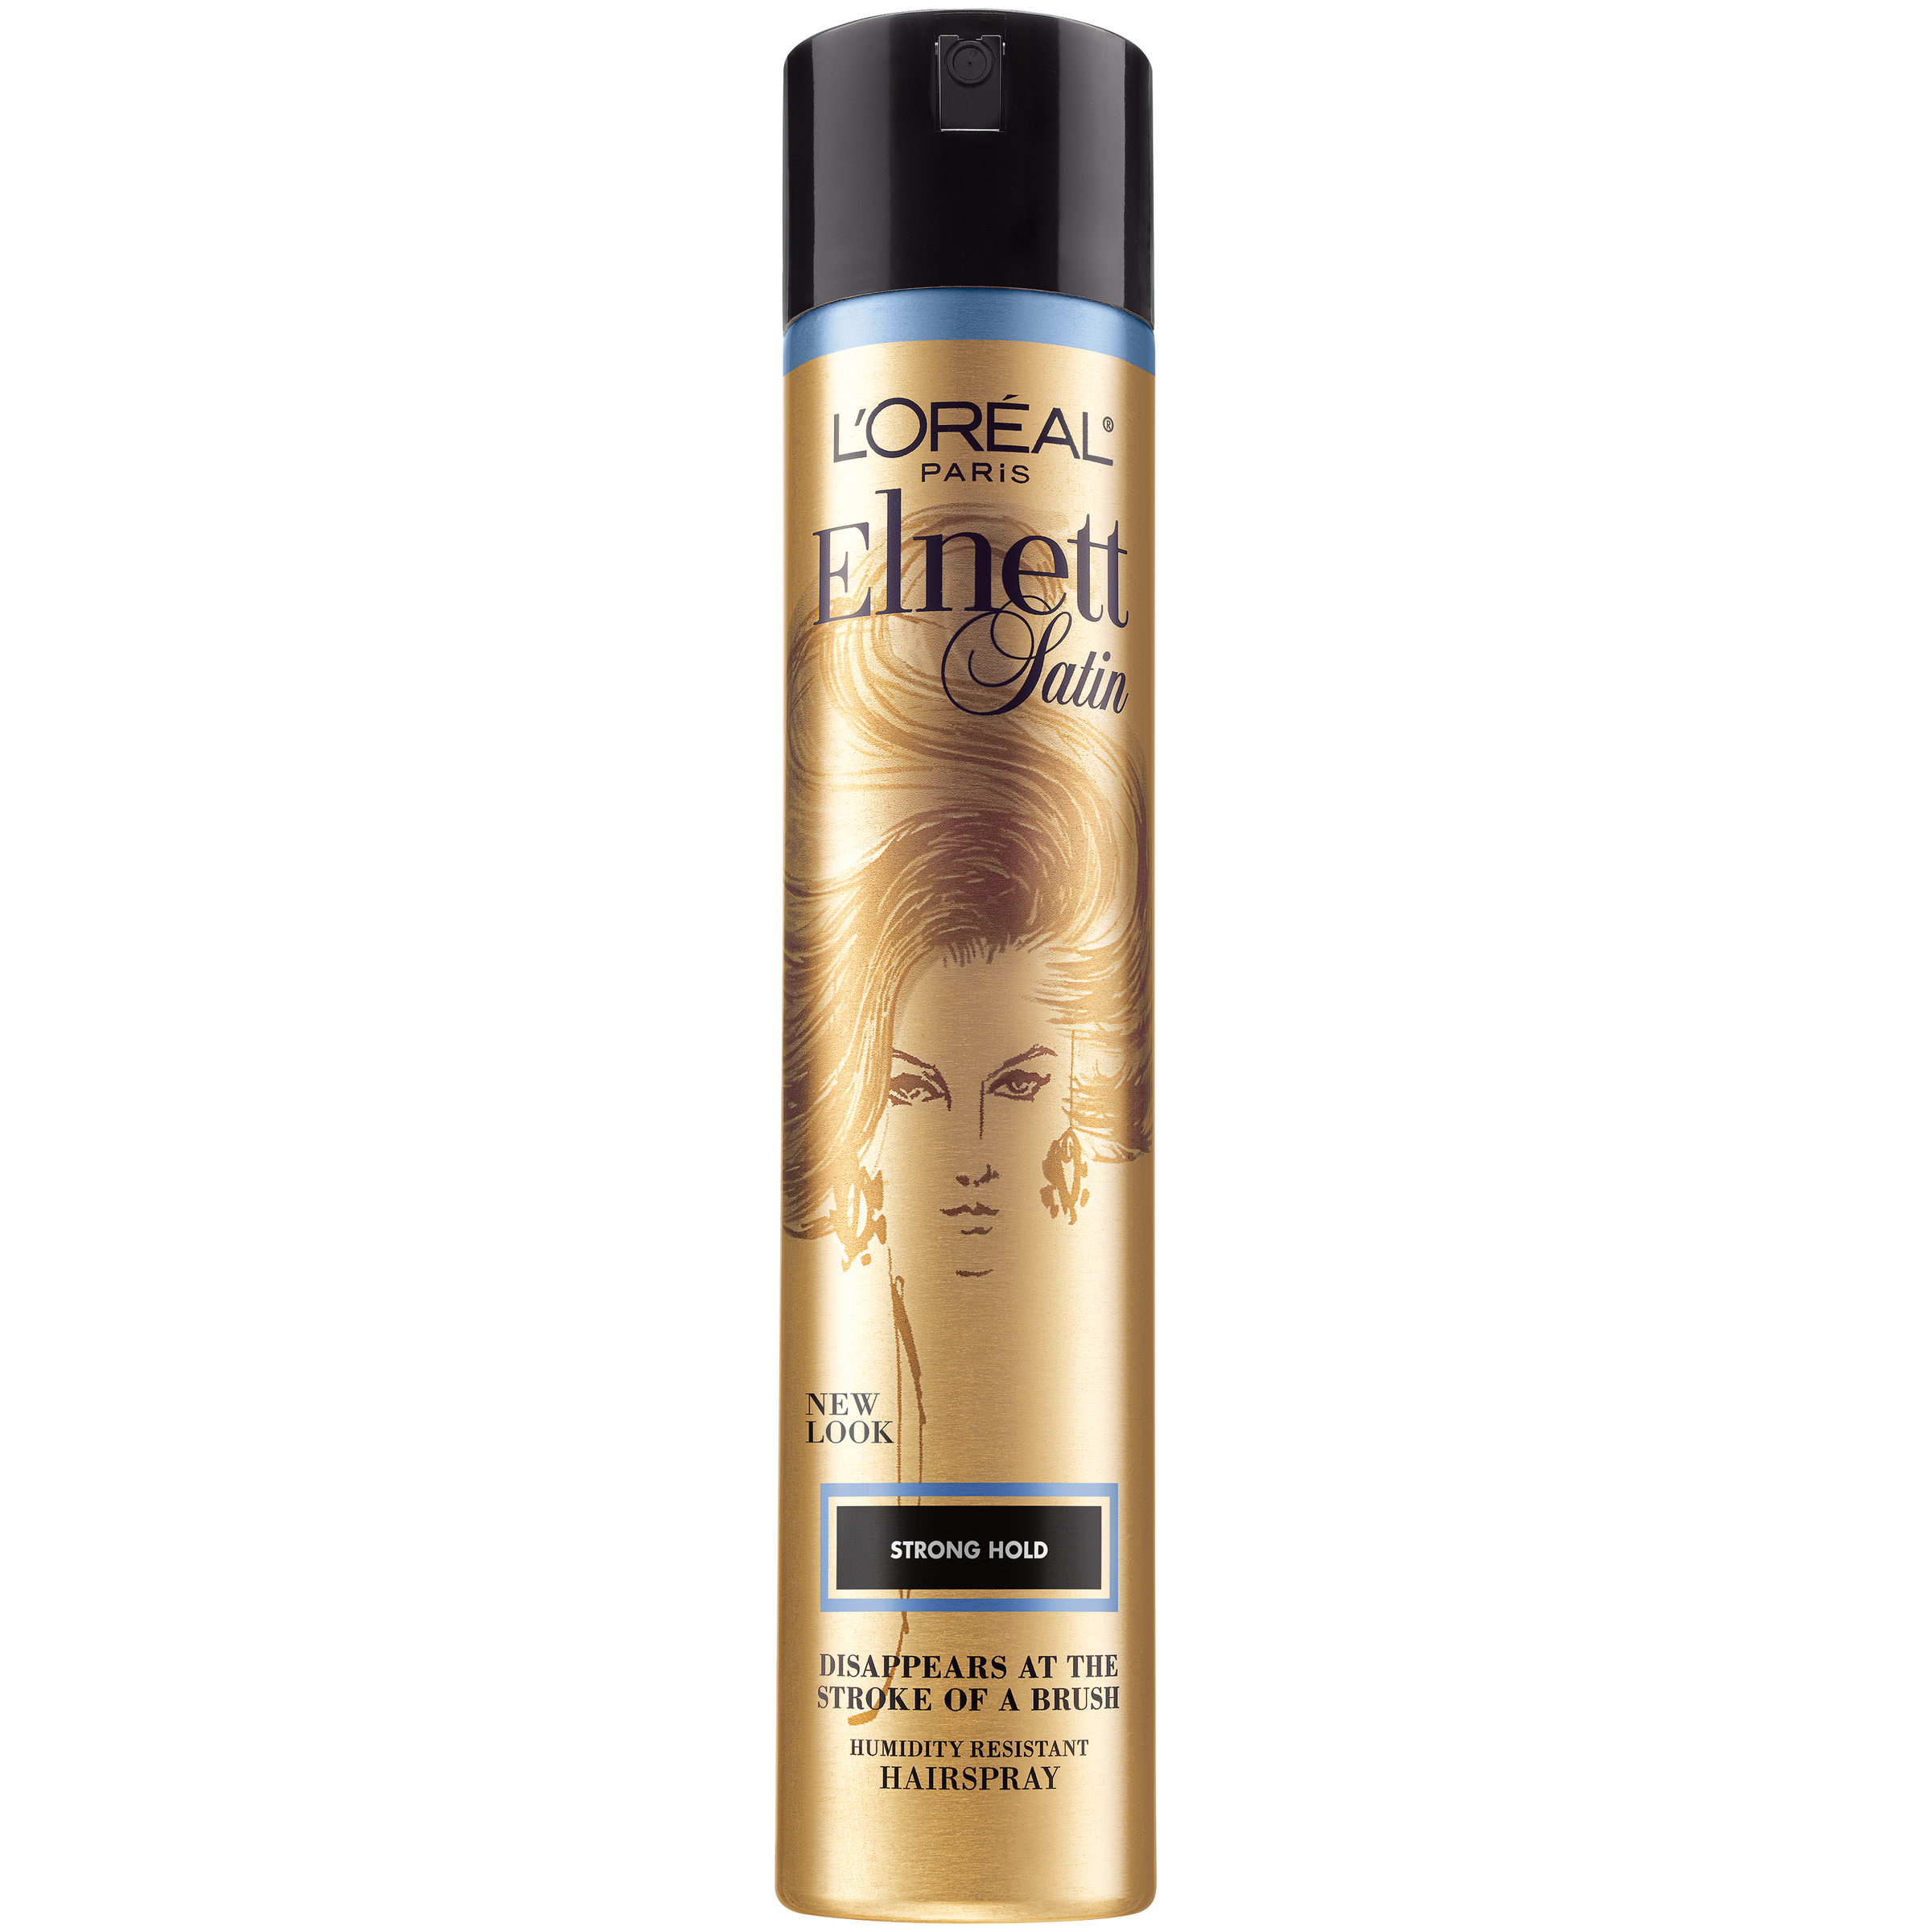 L'Oreal Paris Elnett Satin Strong Hold plus Humidity Resistant Hair Spray, 11 oz. - image 1 of 5